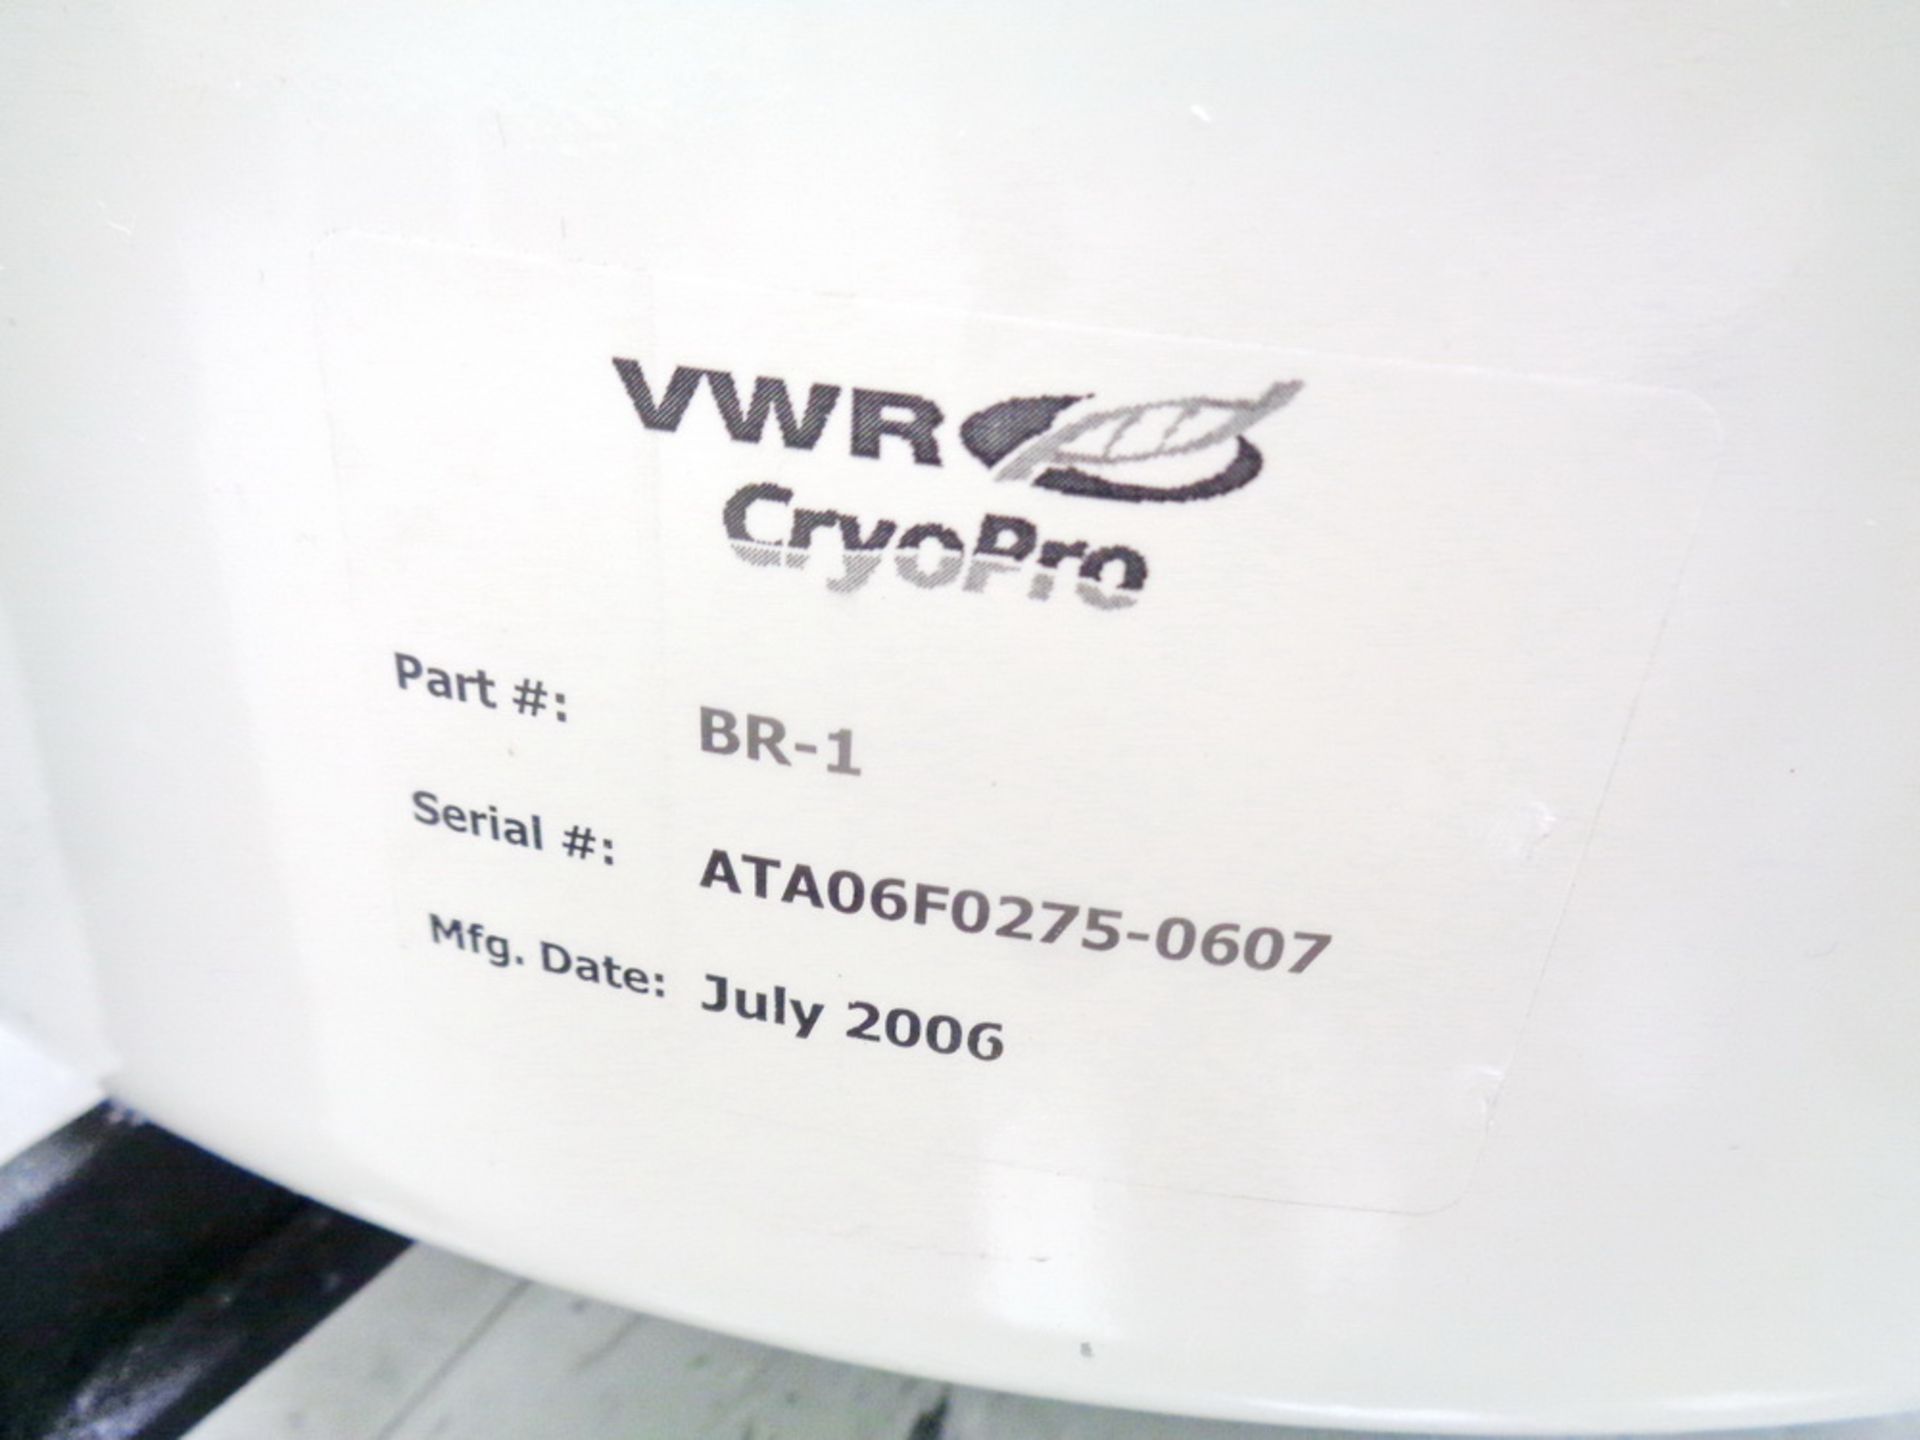 VWR Liquid Nitrogen Tank, Model CryoPro BR-1, S/N ATA06F0275-0607 - Image 2 of 2